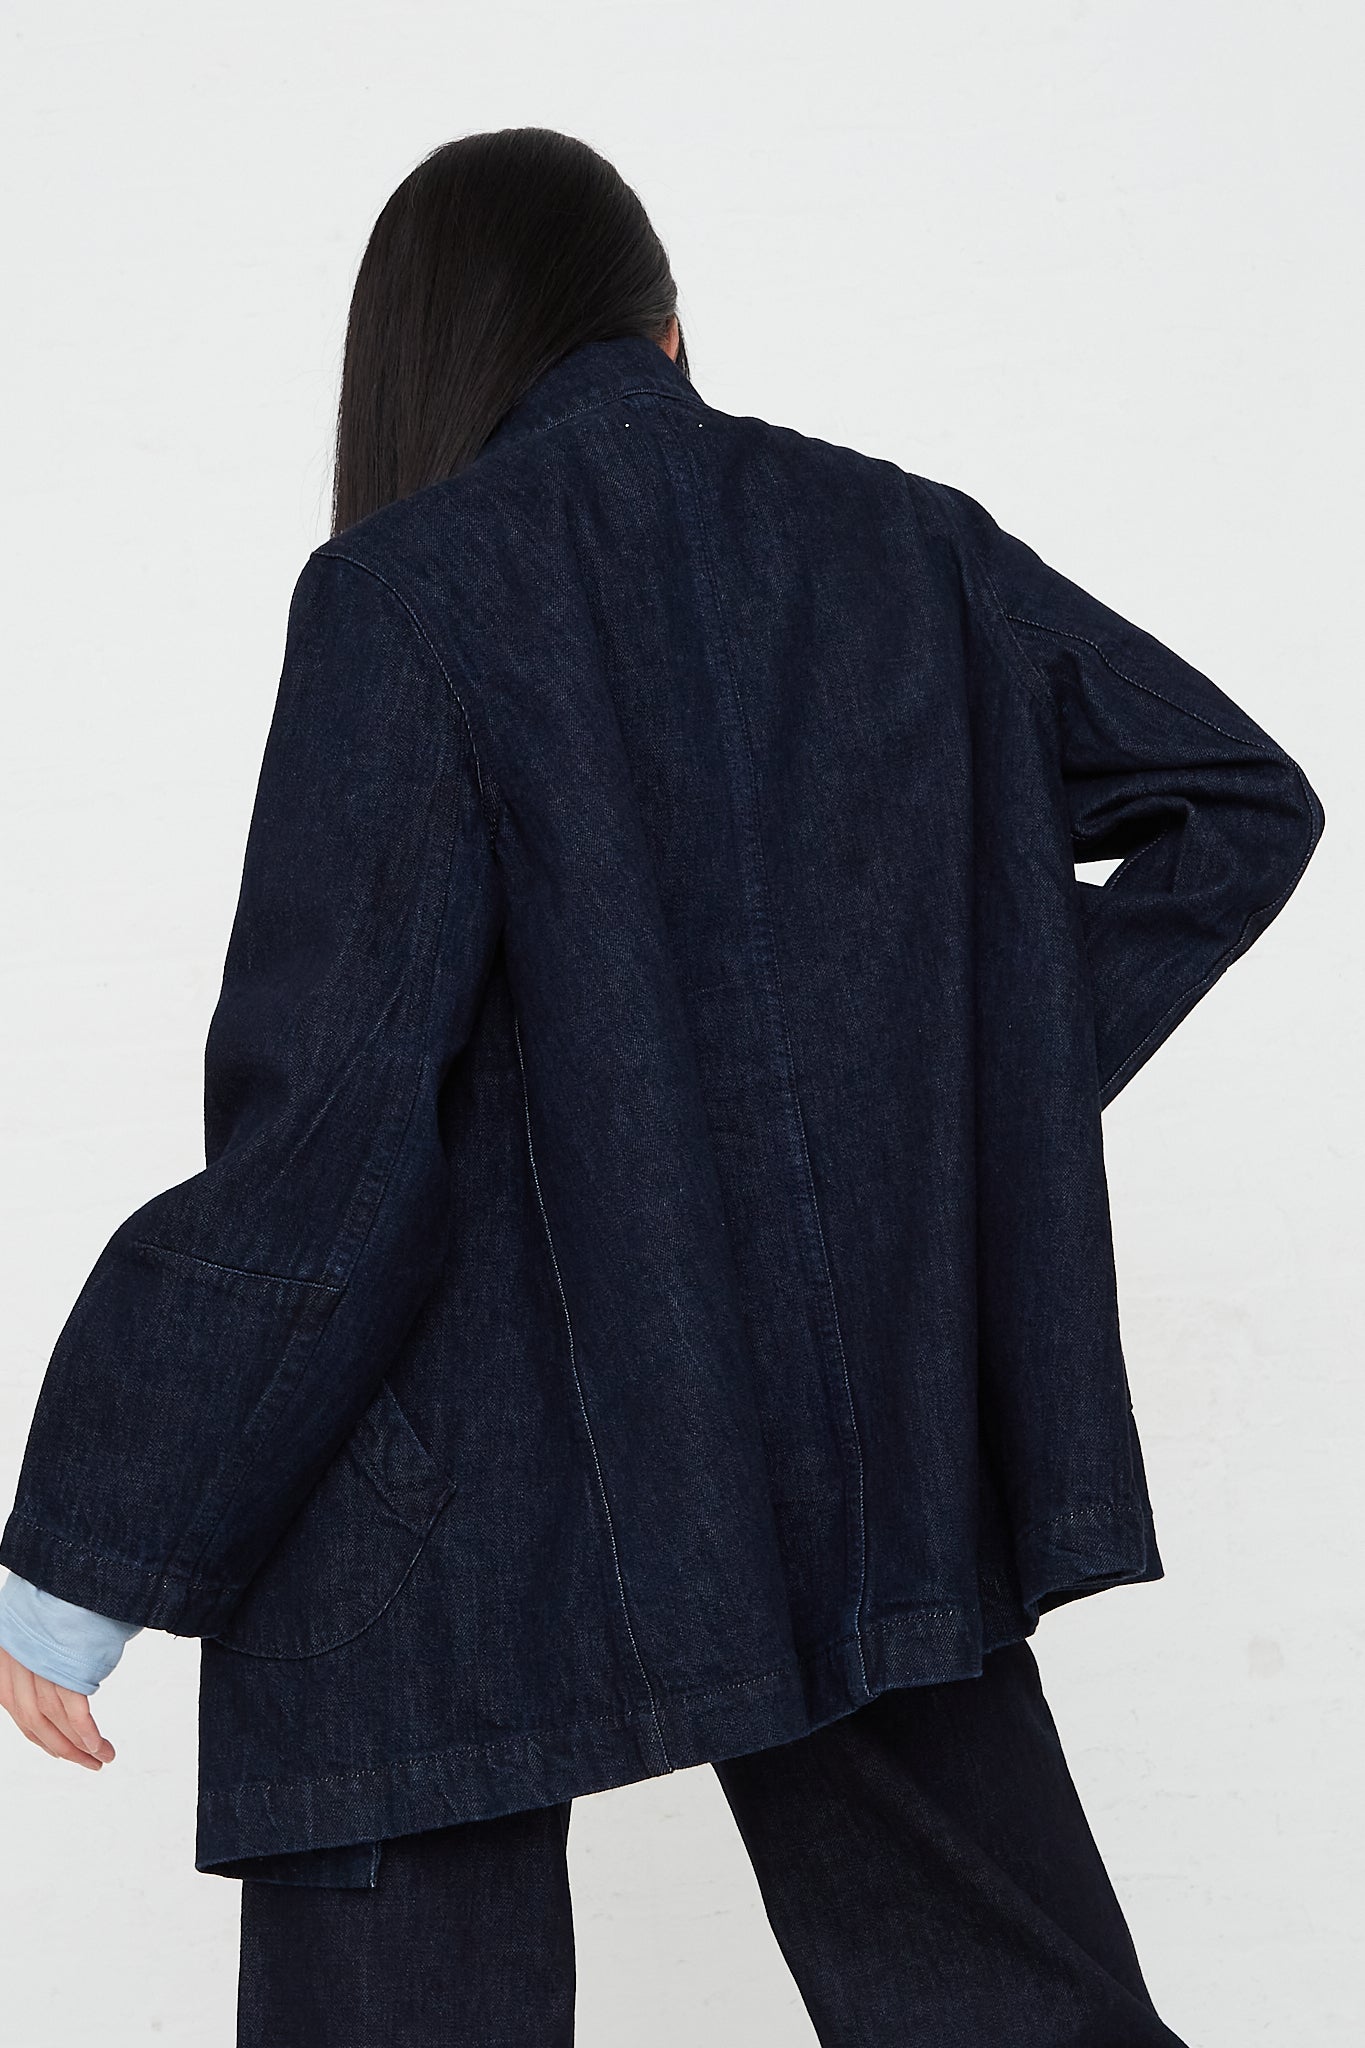 Deck Jacket in Japanese Denim by Jesse Kamm for Oroboro Back